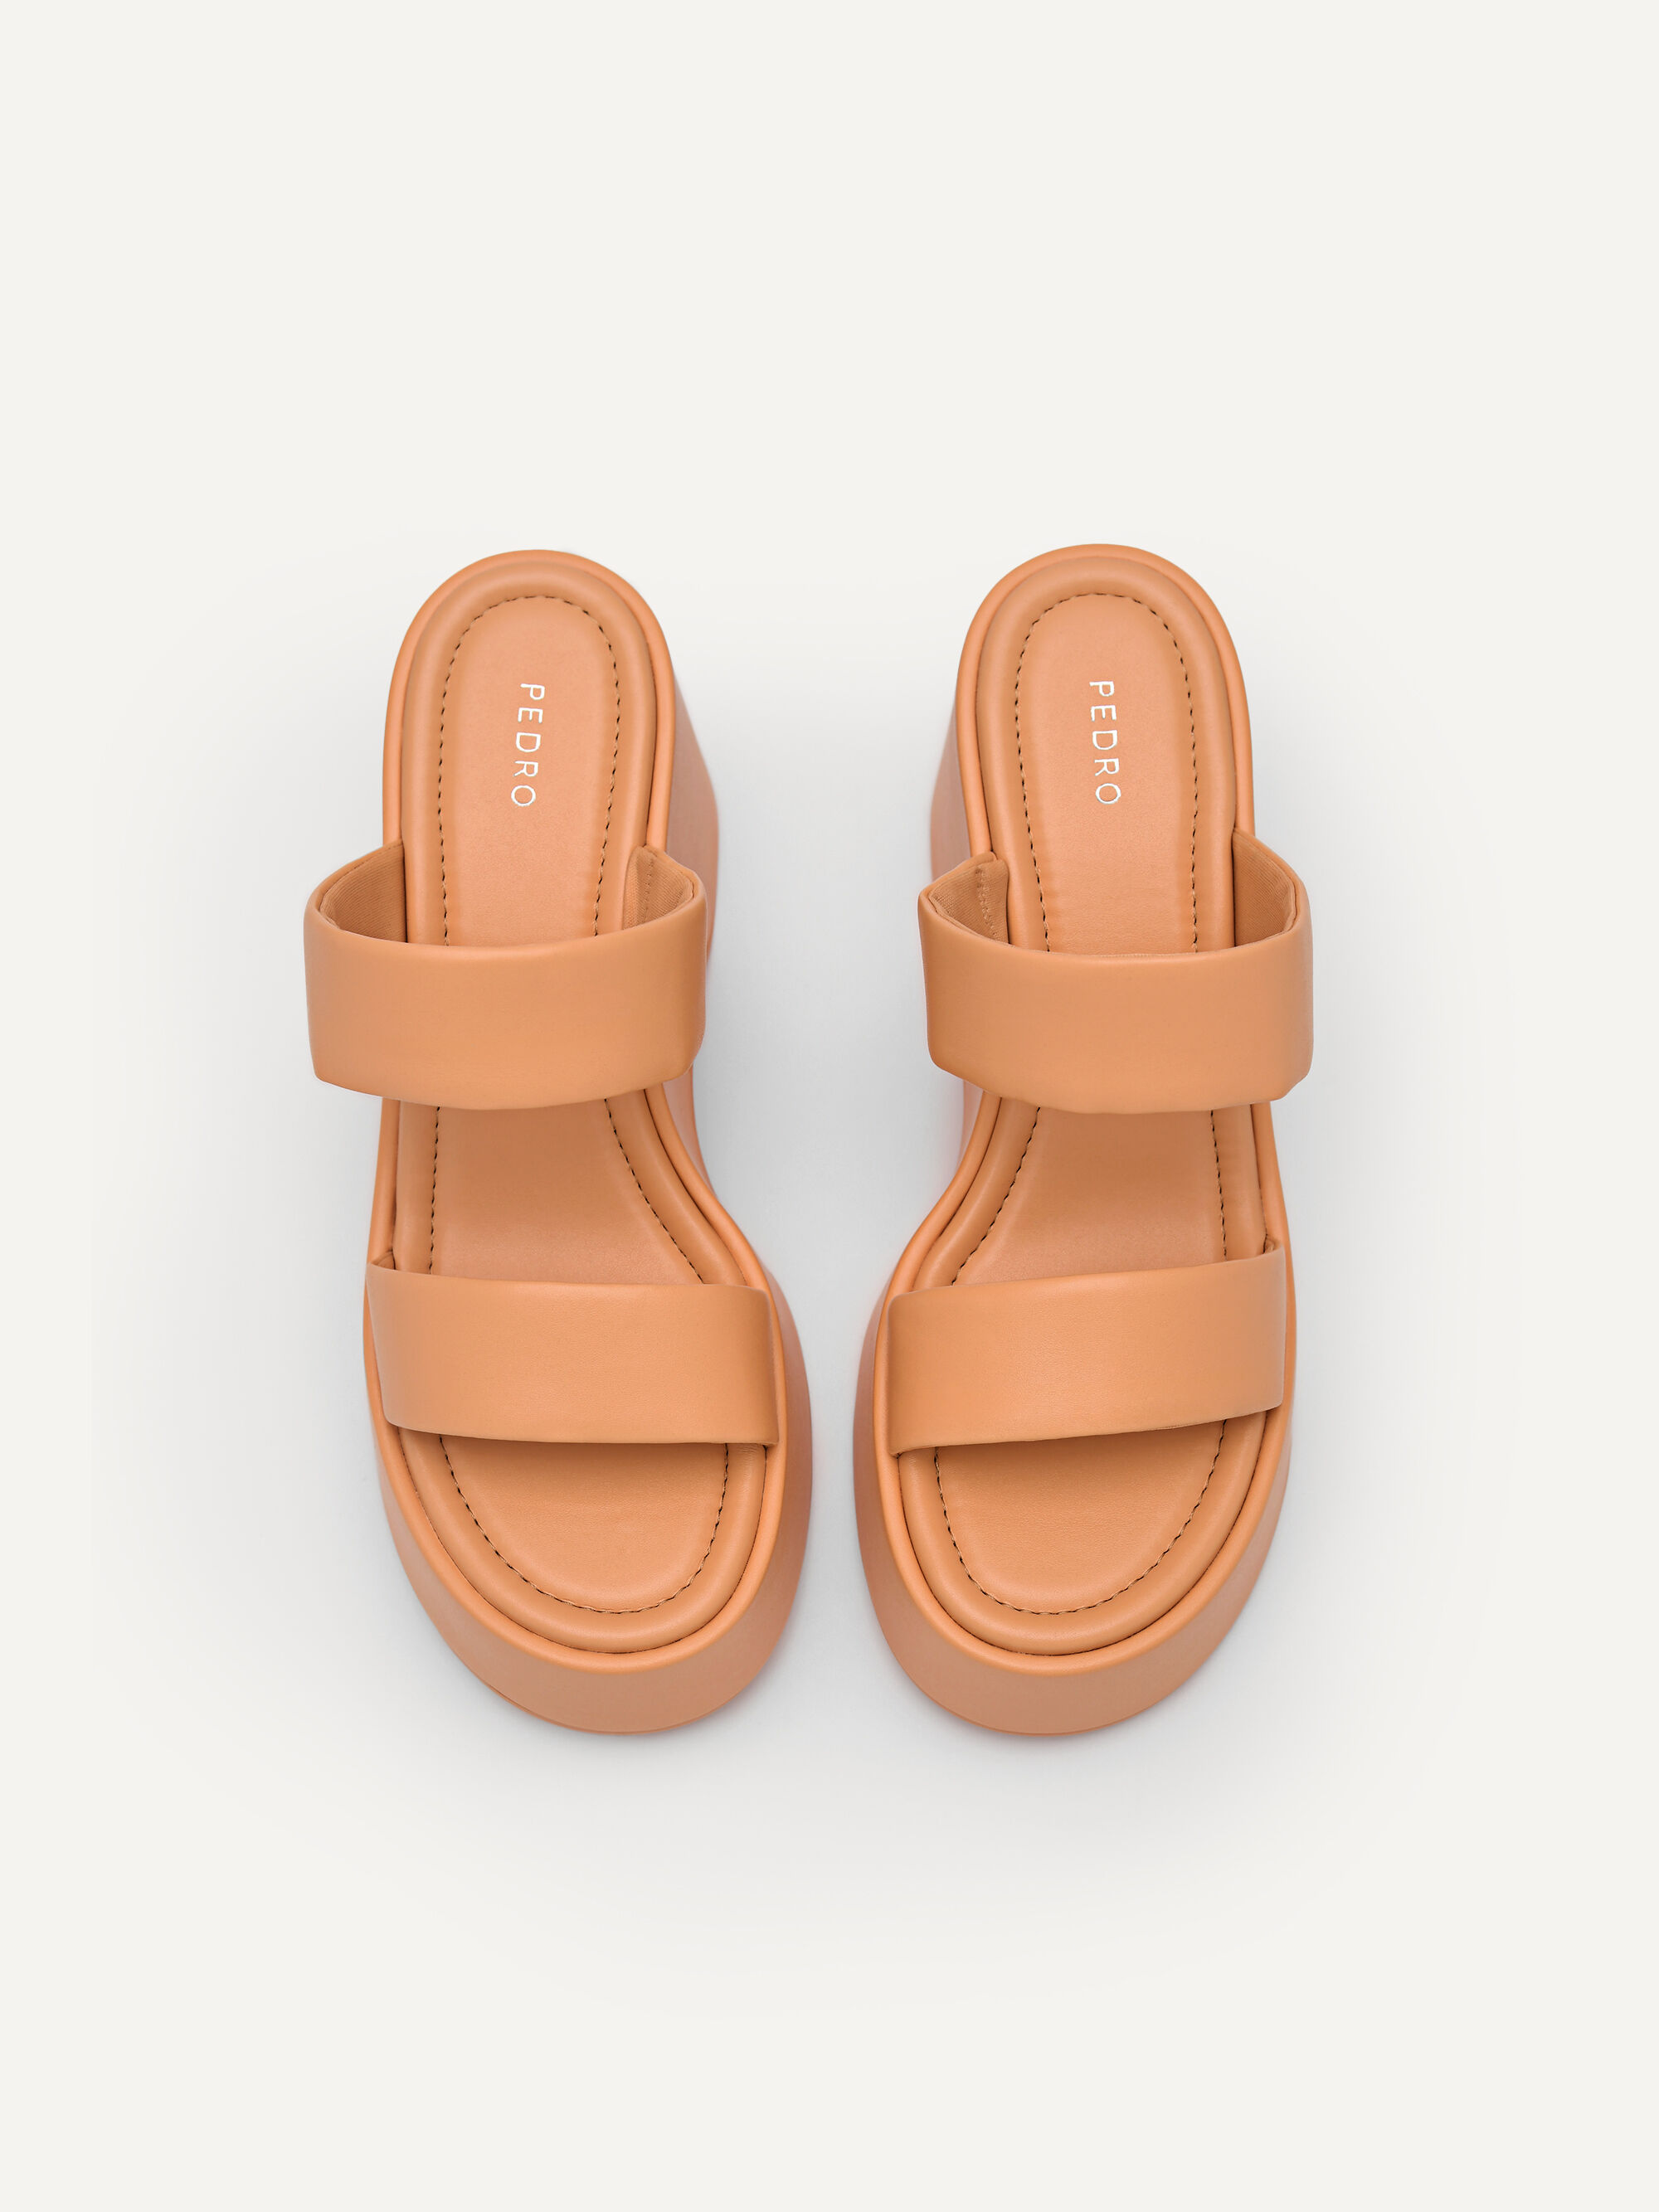 Bianca Wedge Sandals, Light Orange